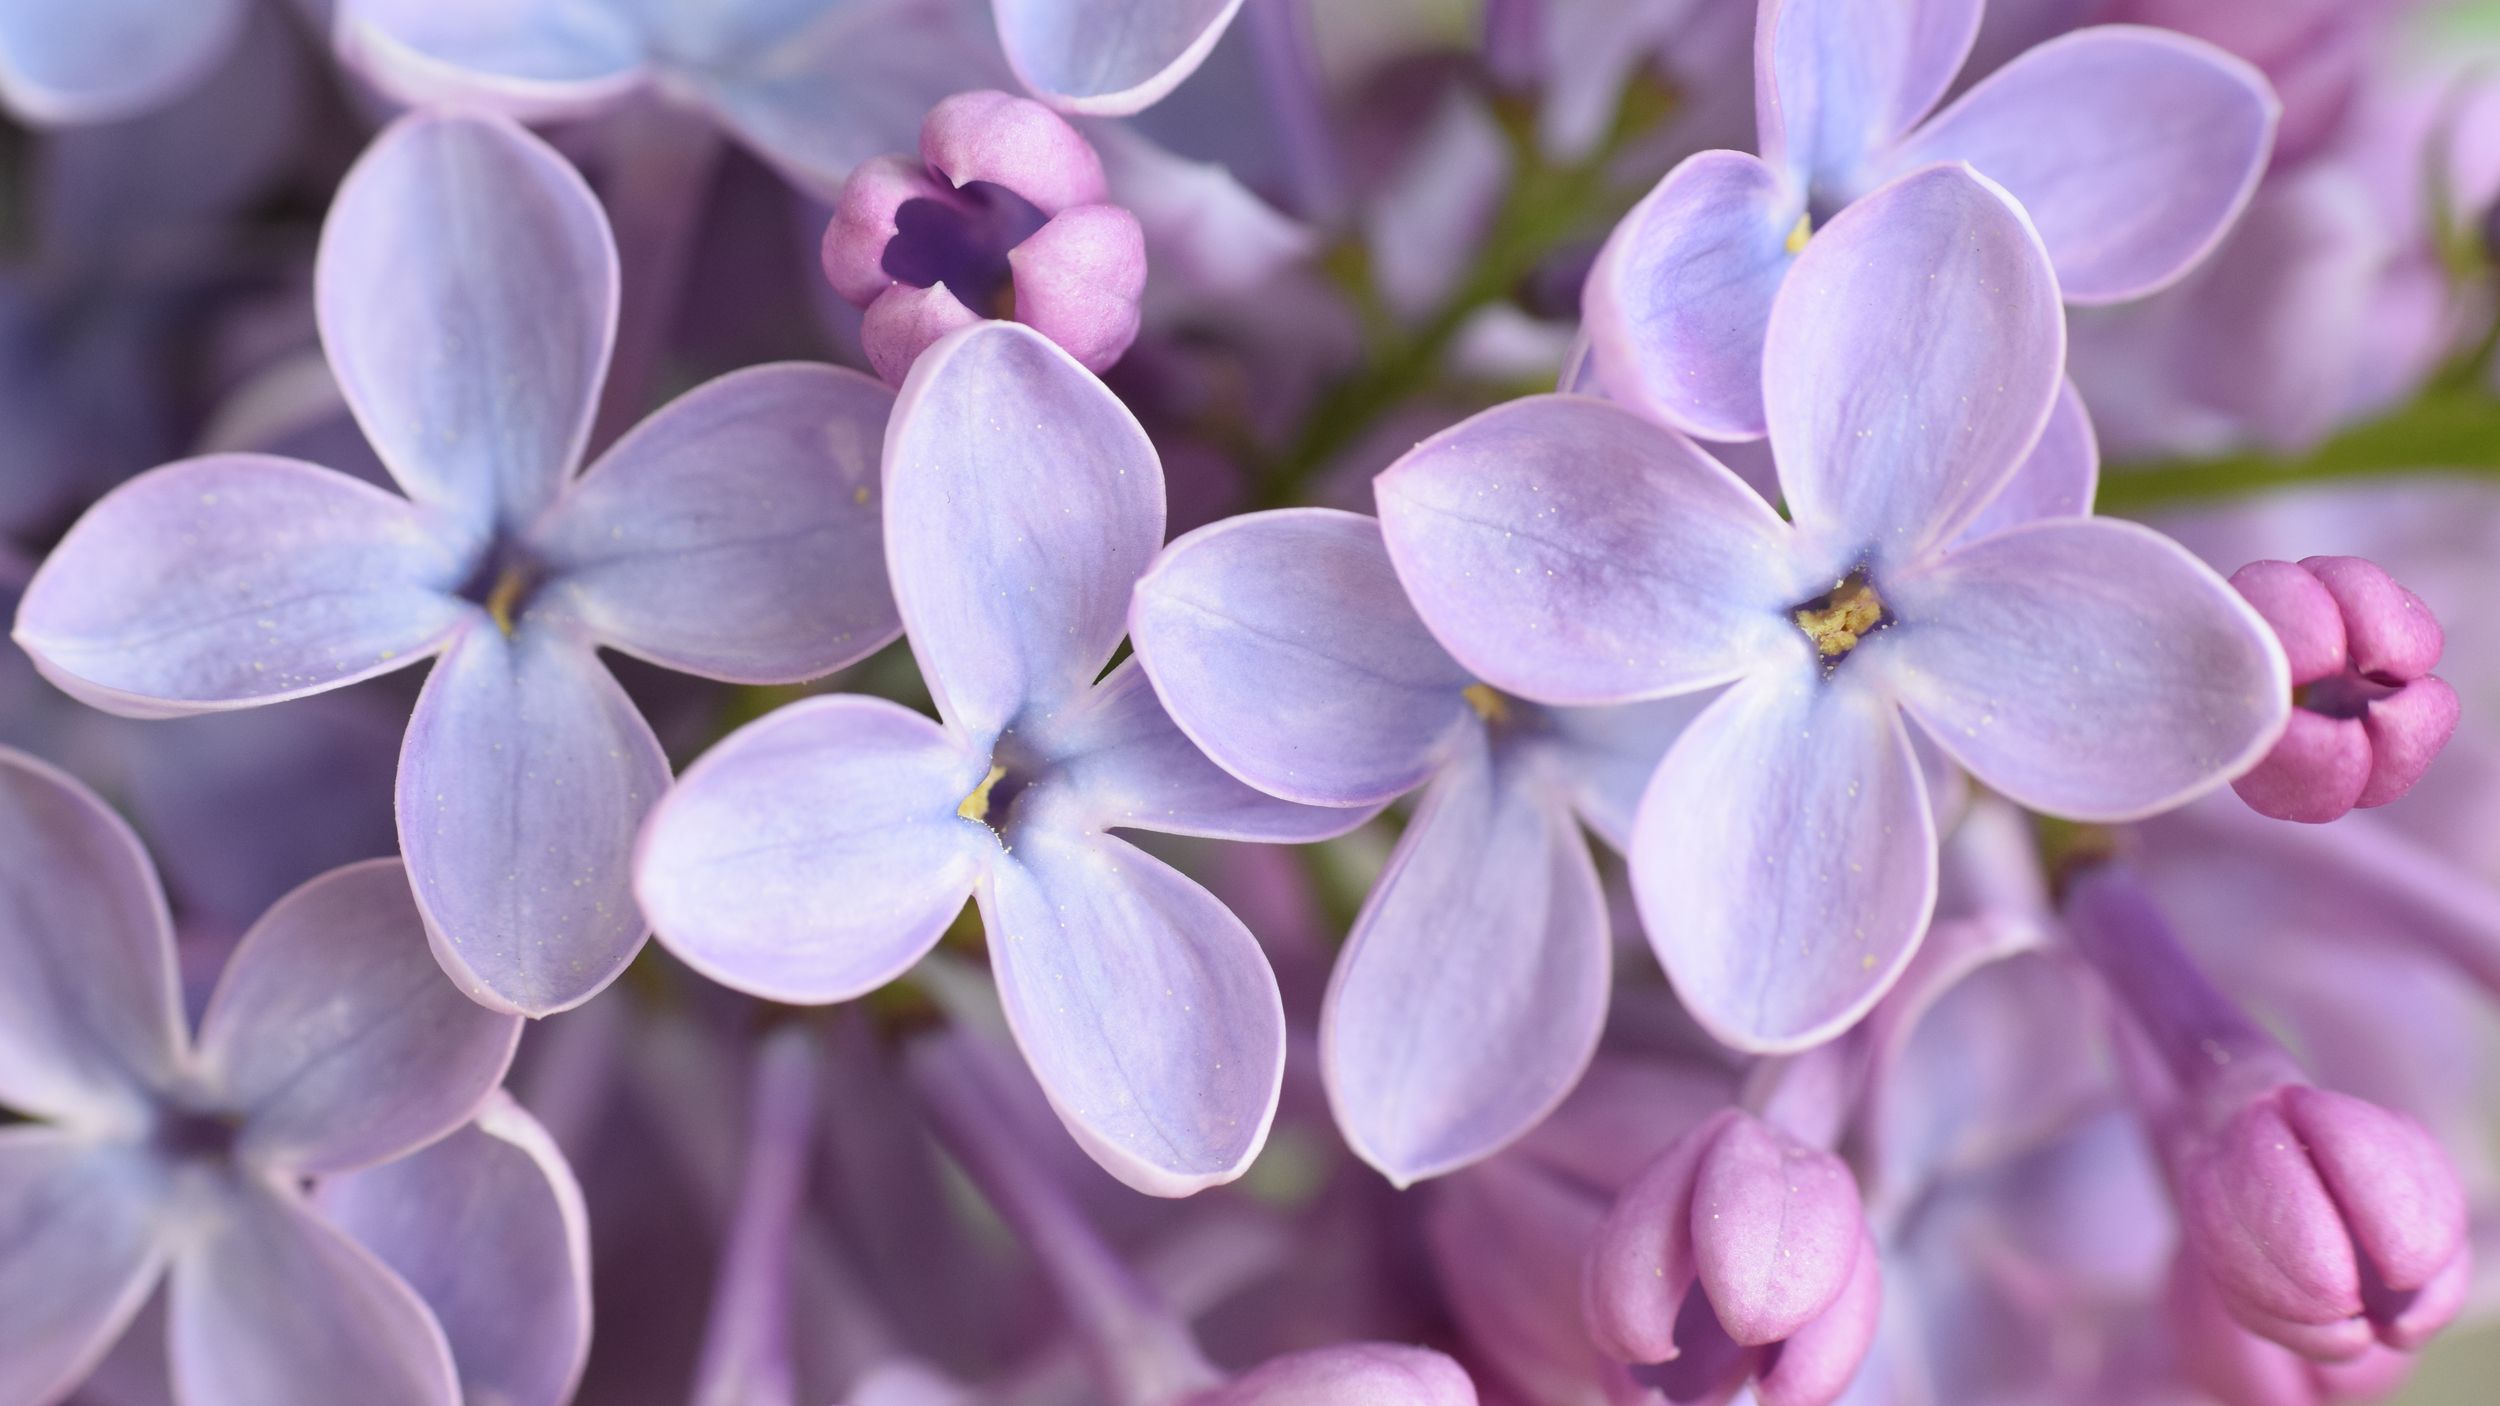 Lilac